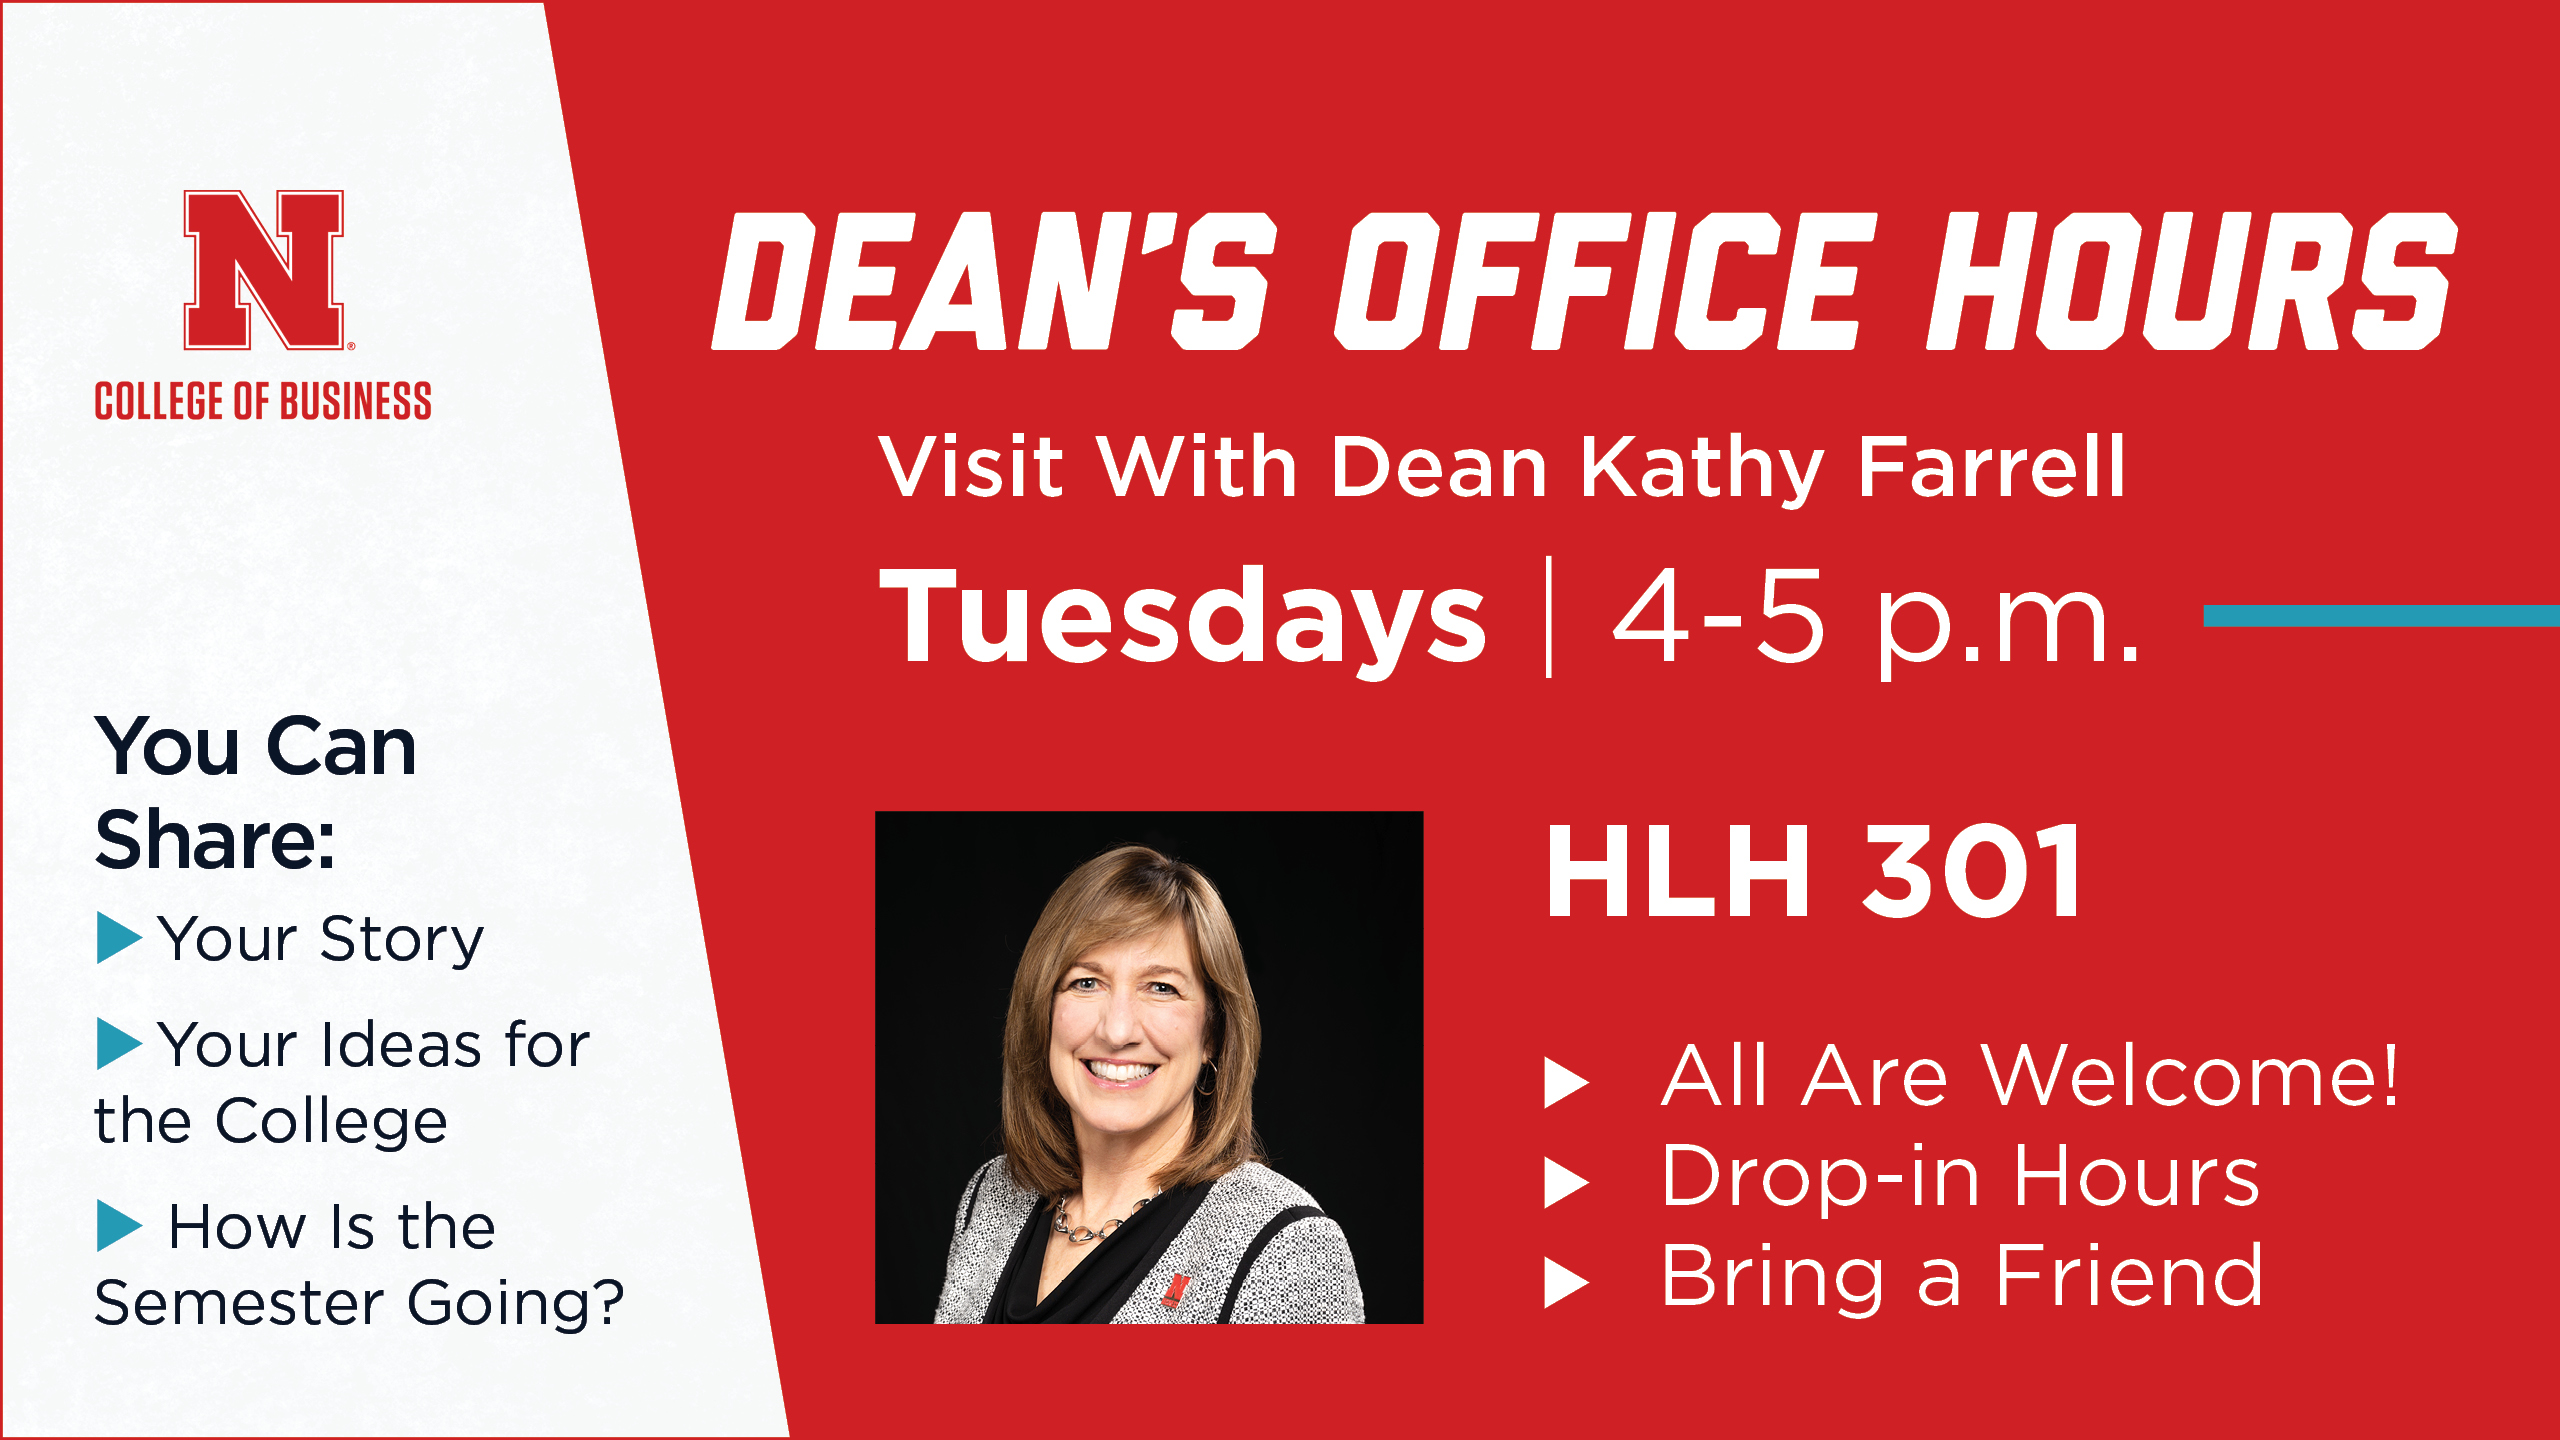 Dean's Office Hours